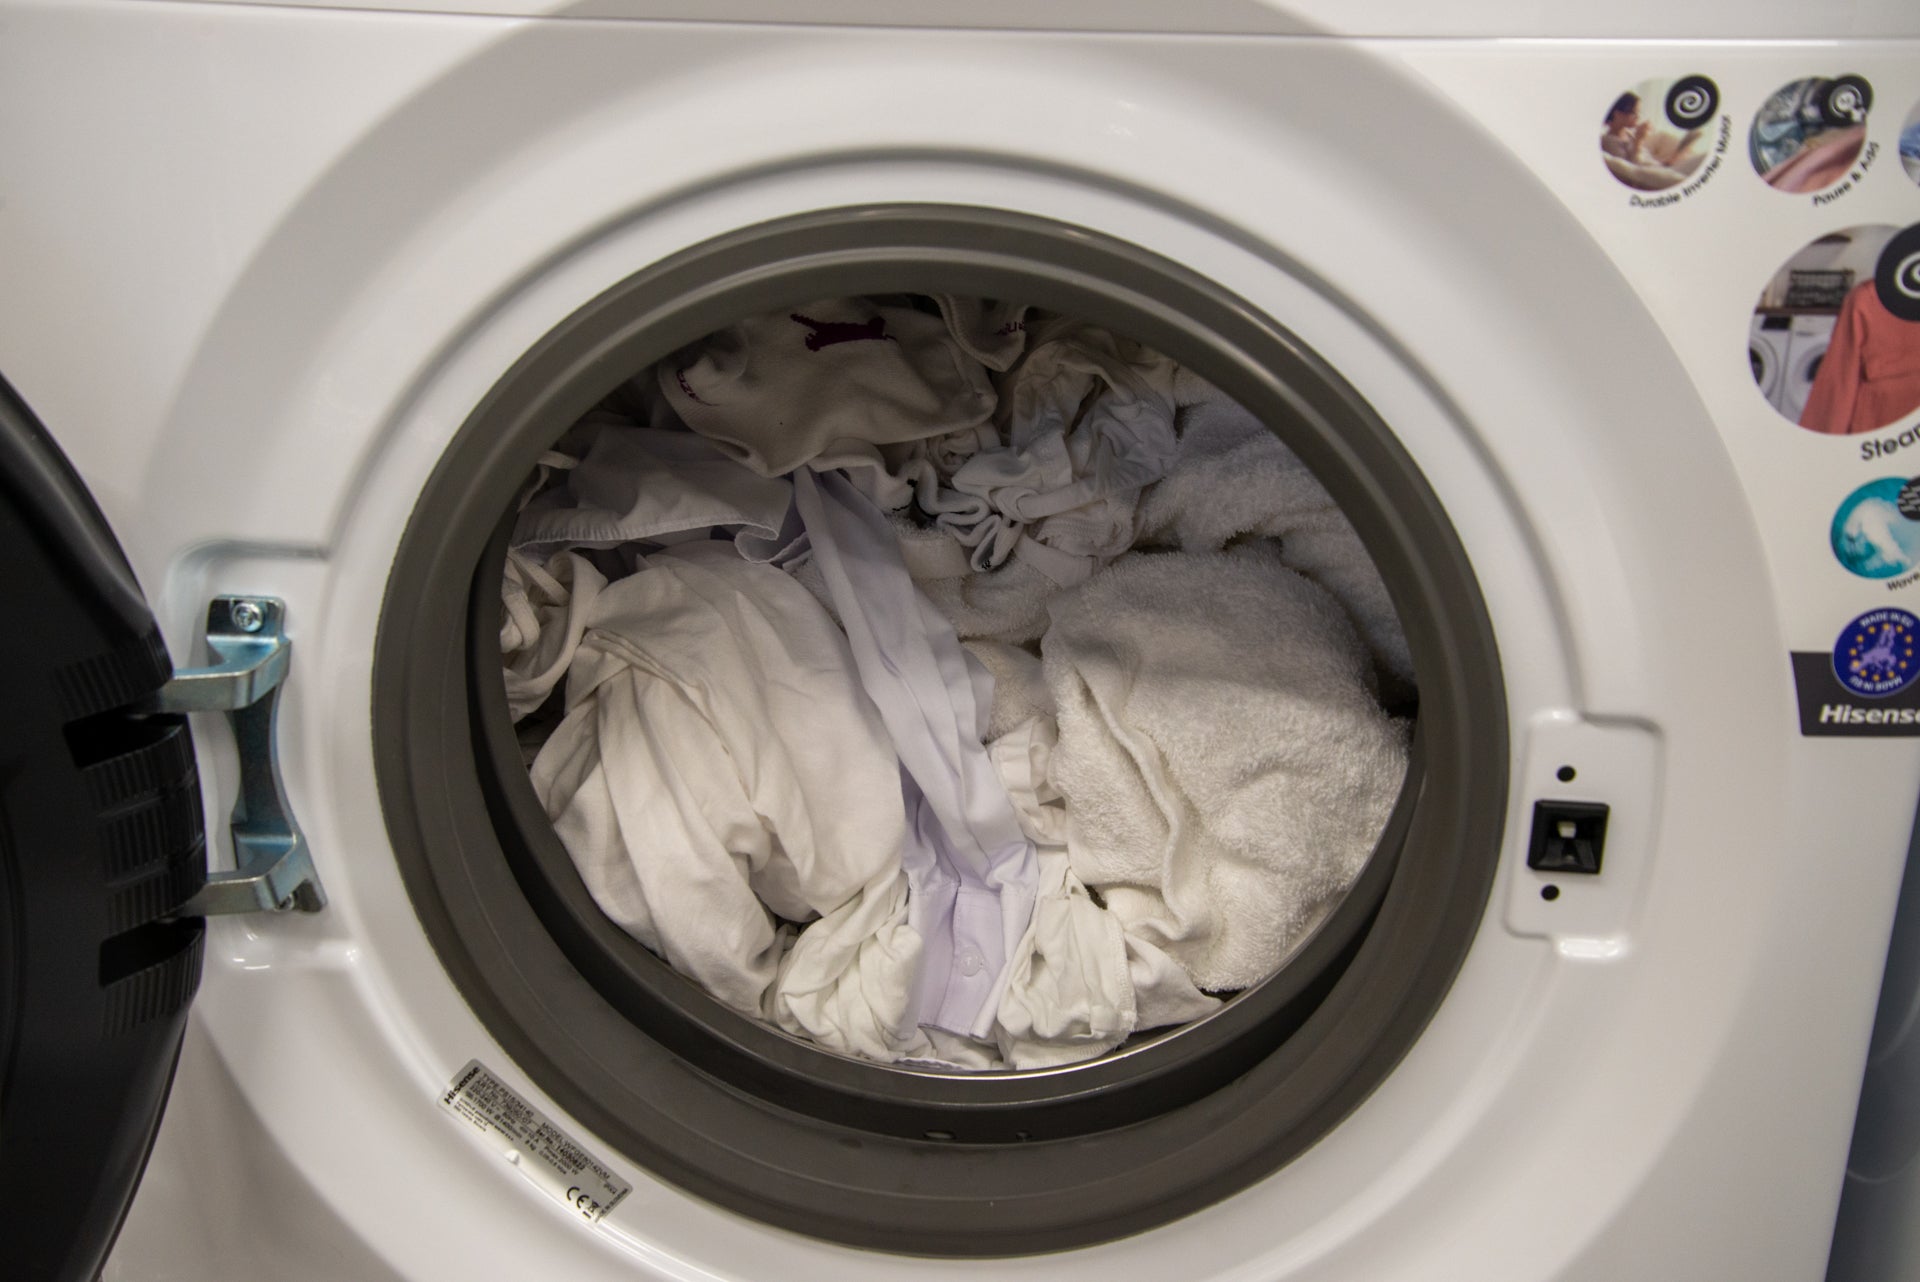 Hisense WFGE80142VM Review: A very straightforward washing machine